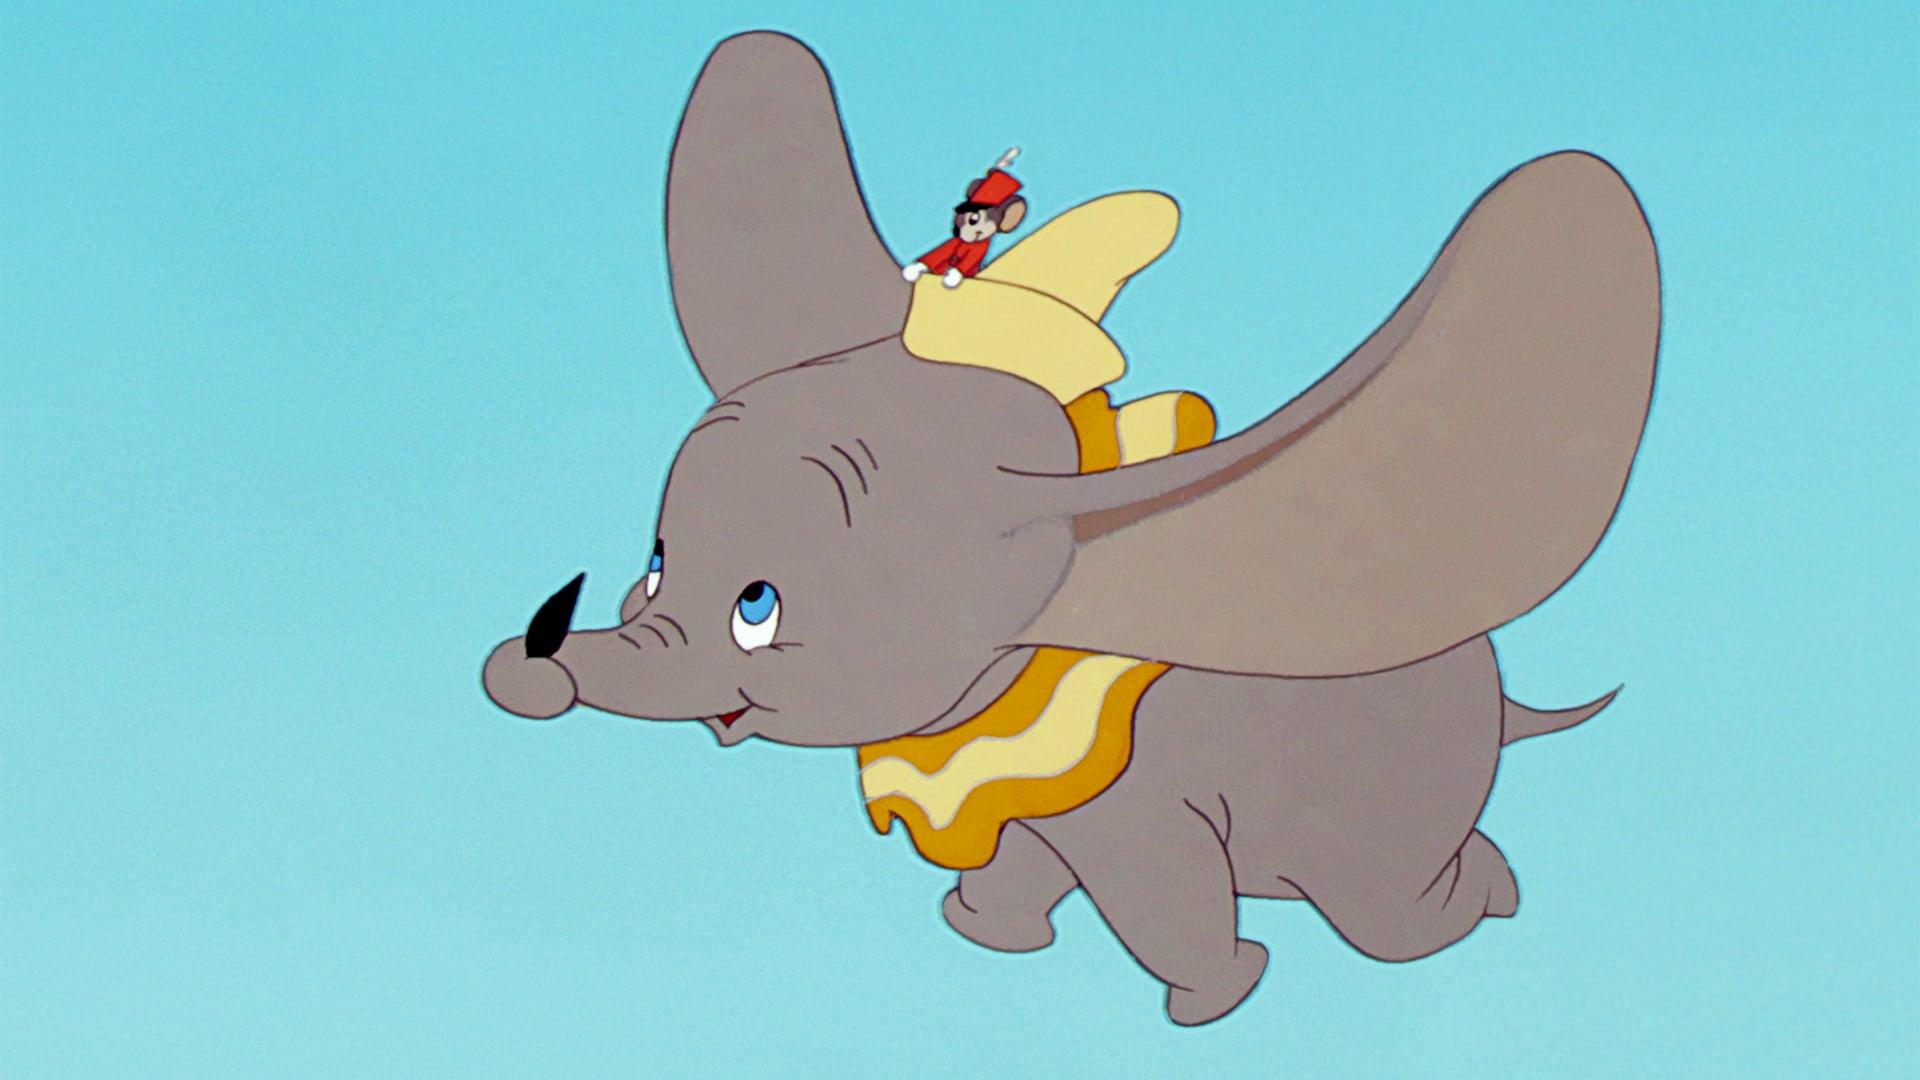 Site revela sinopse do live-action de Dumbo